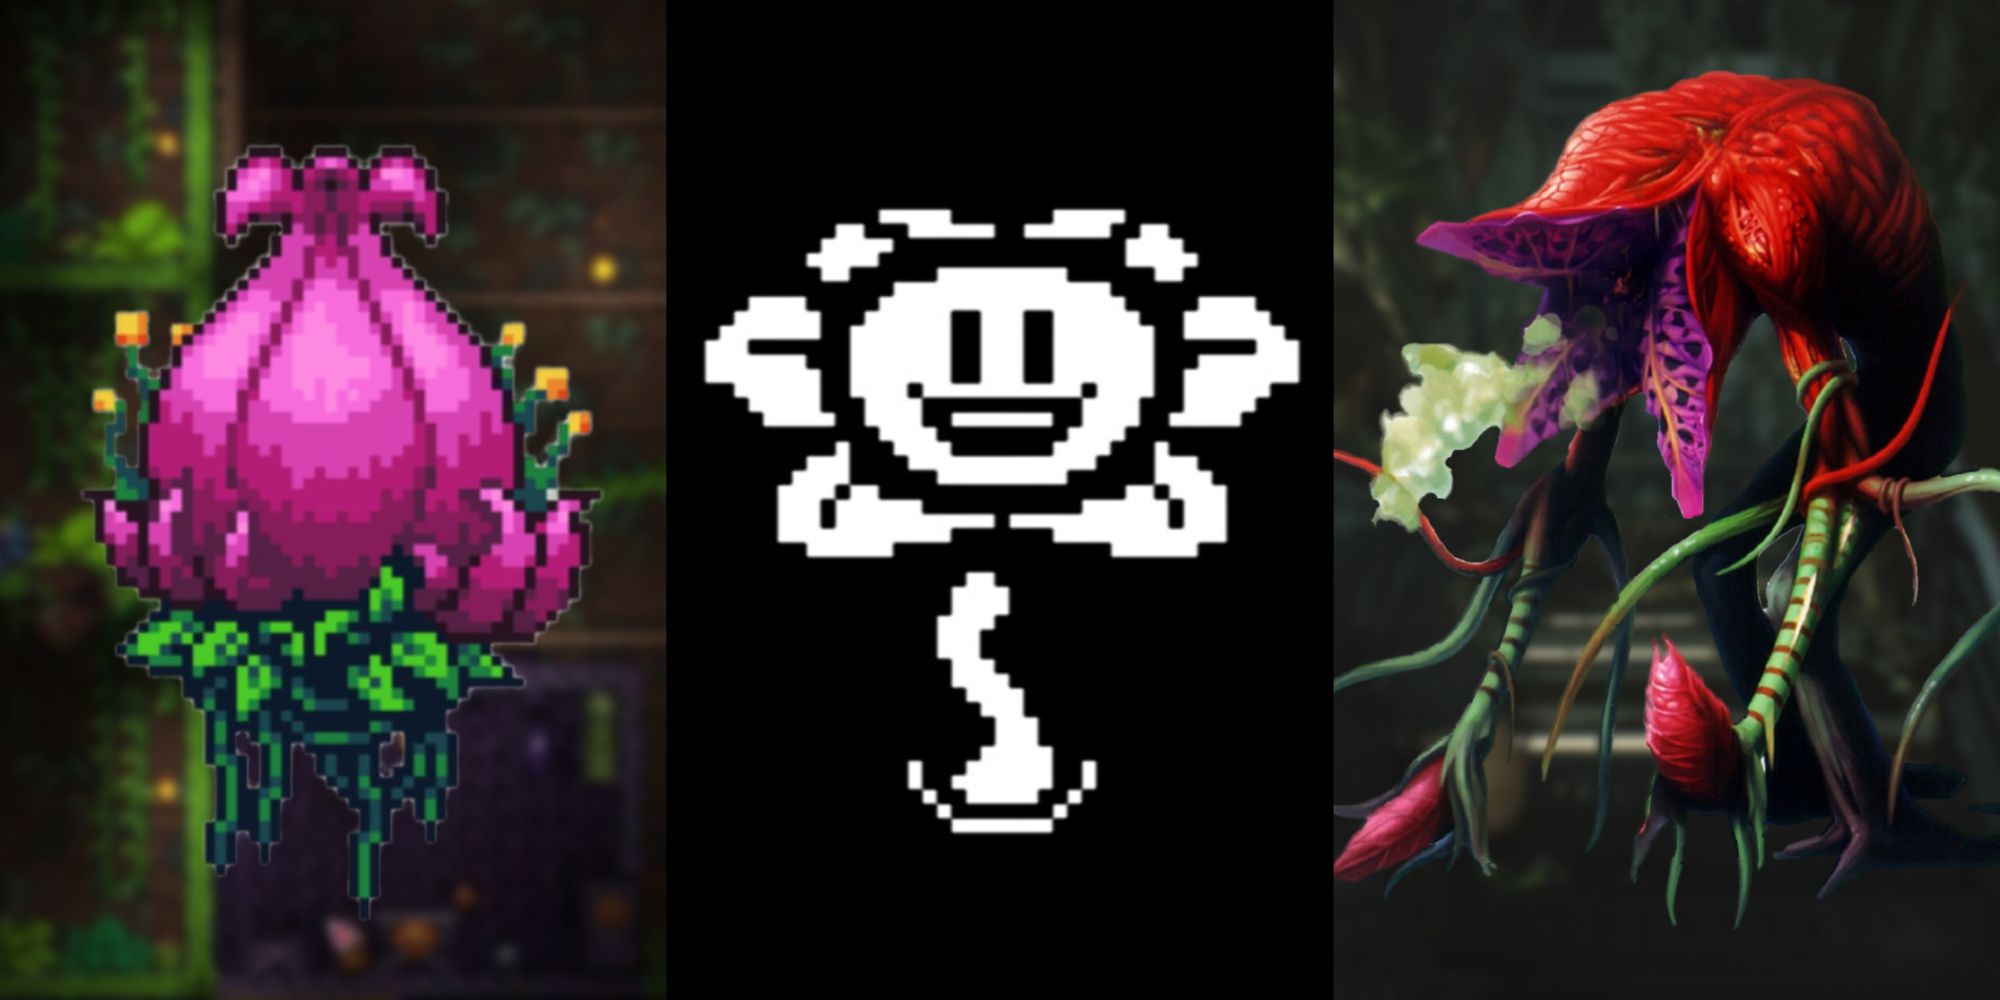 Dangerous Flowers in Video Games